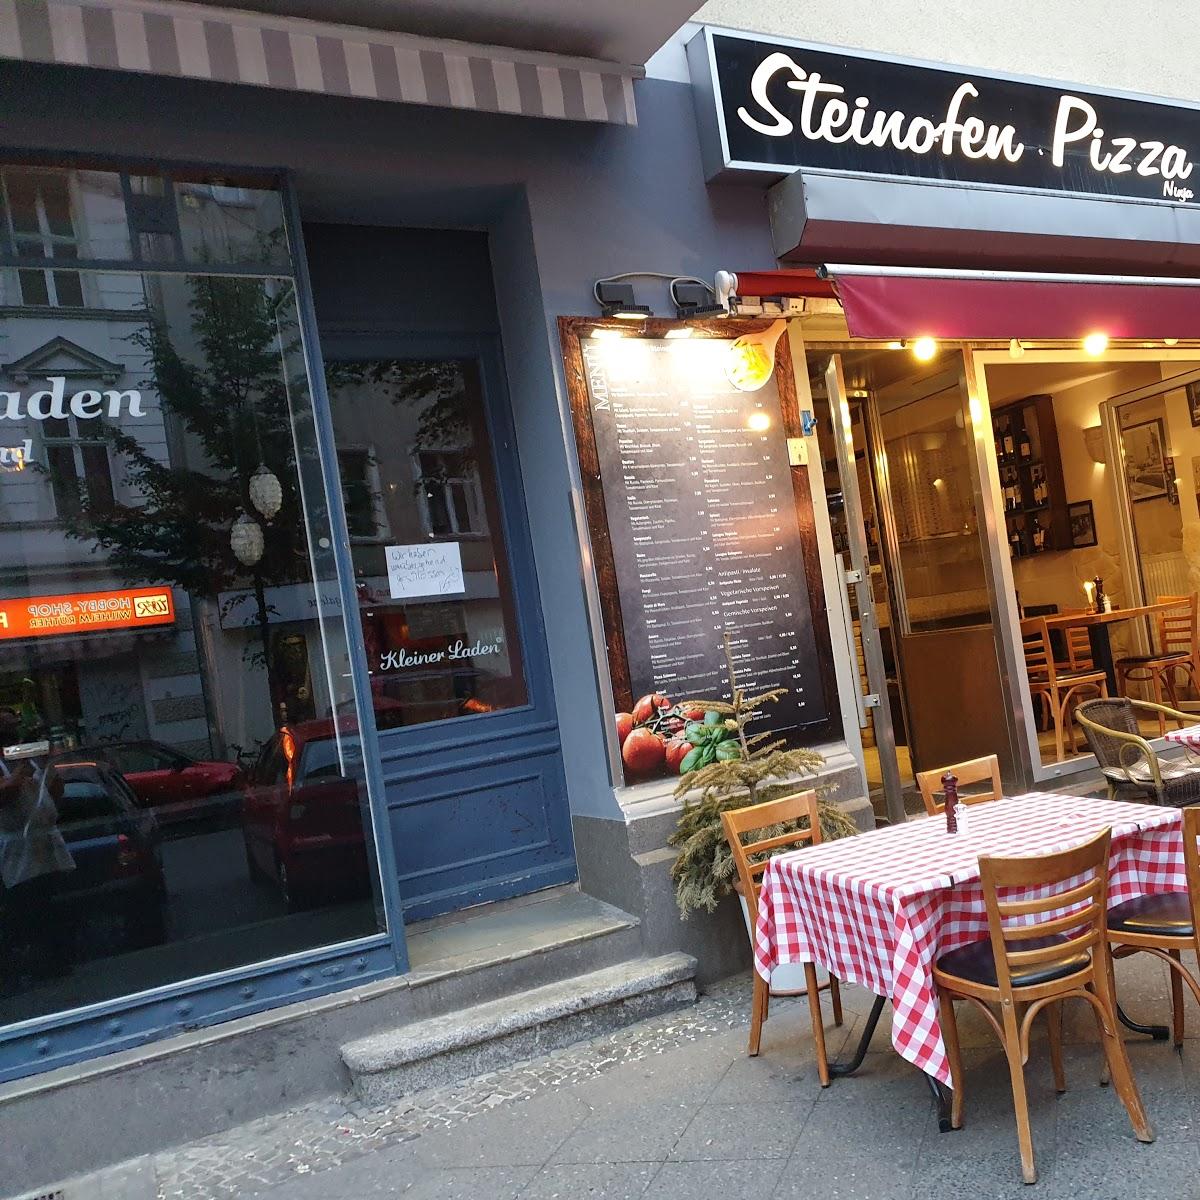 Restaurant "Steinofen Pizzeria - Schöneberg - Berlin" in Berlin